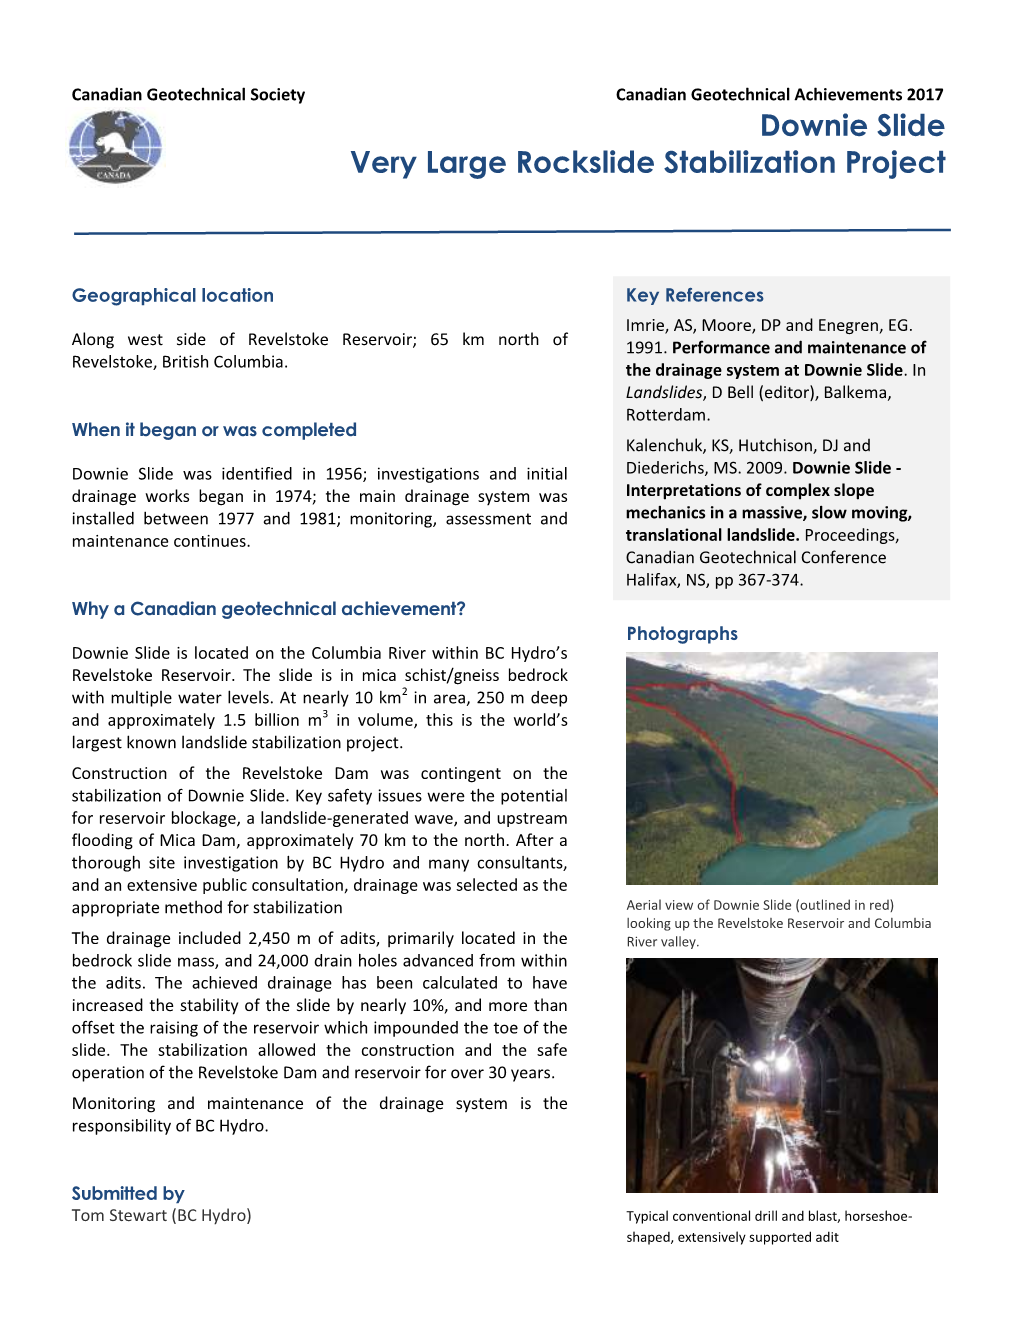 Downie Slide Very Large Rockslide Stabilization Project